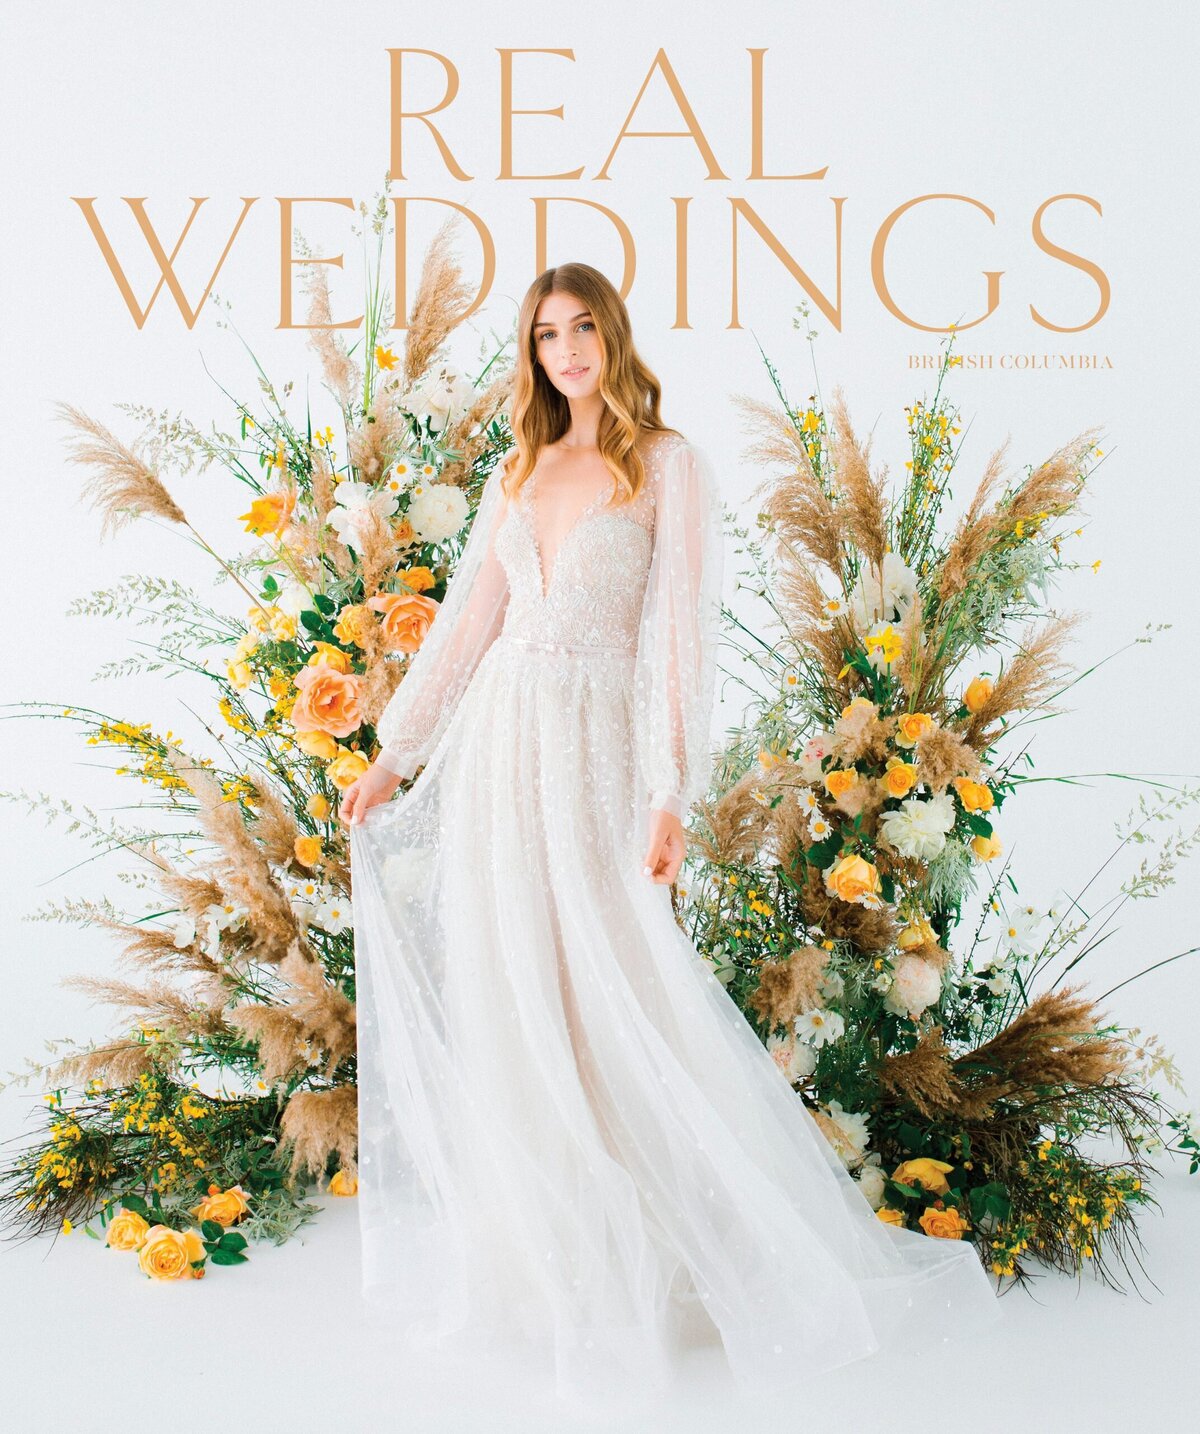 real weddings magazine cover 2019